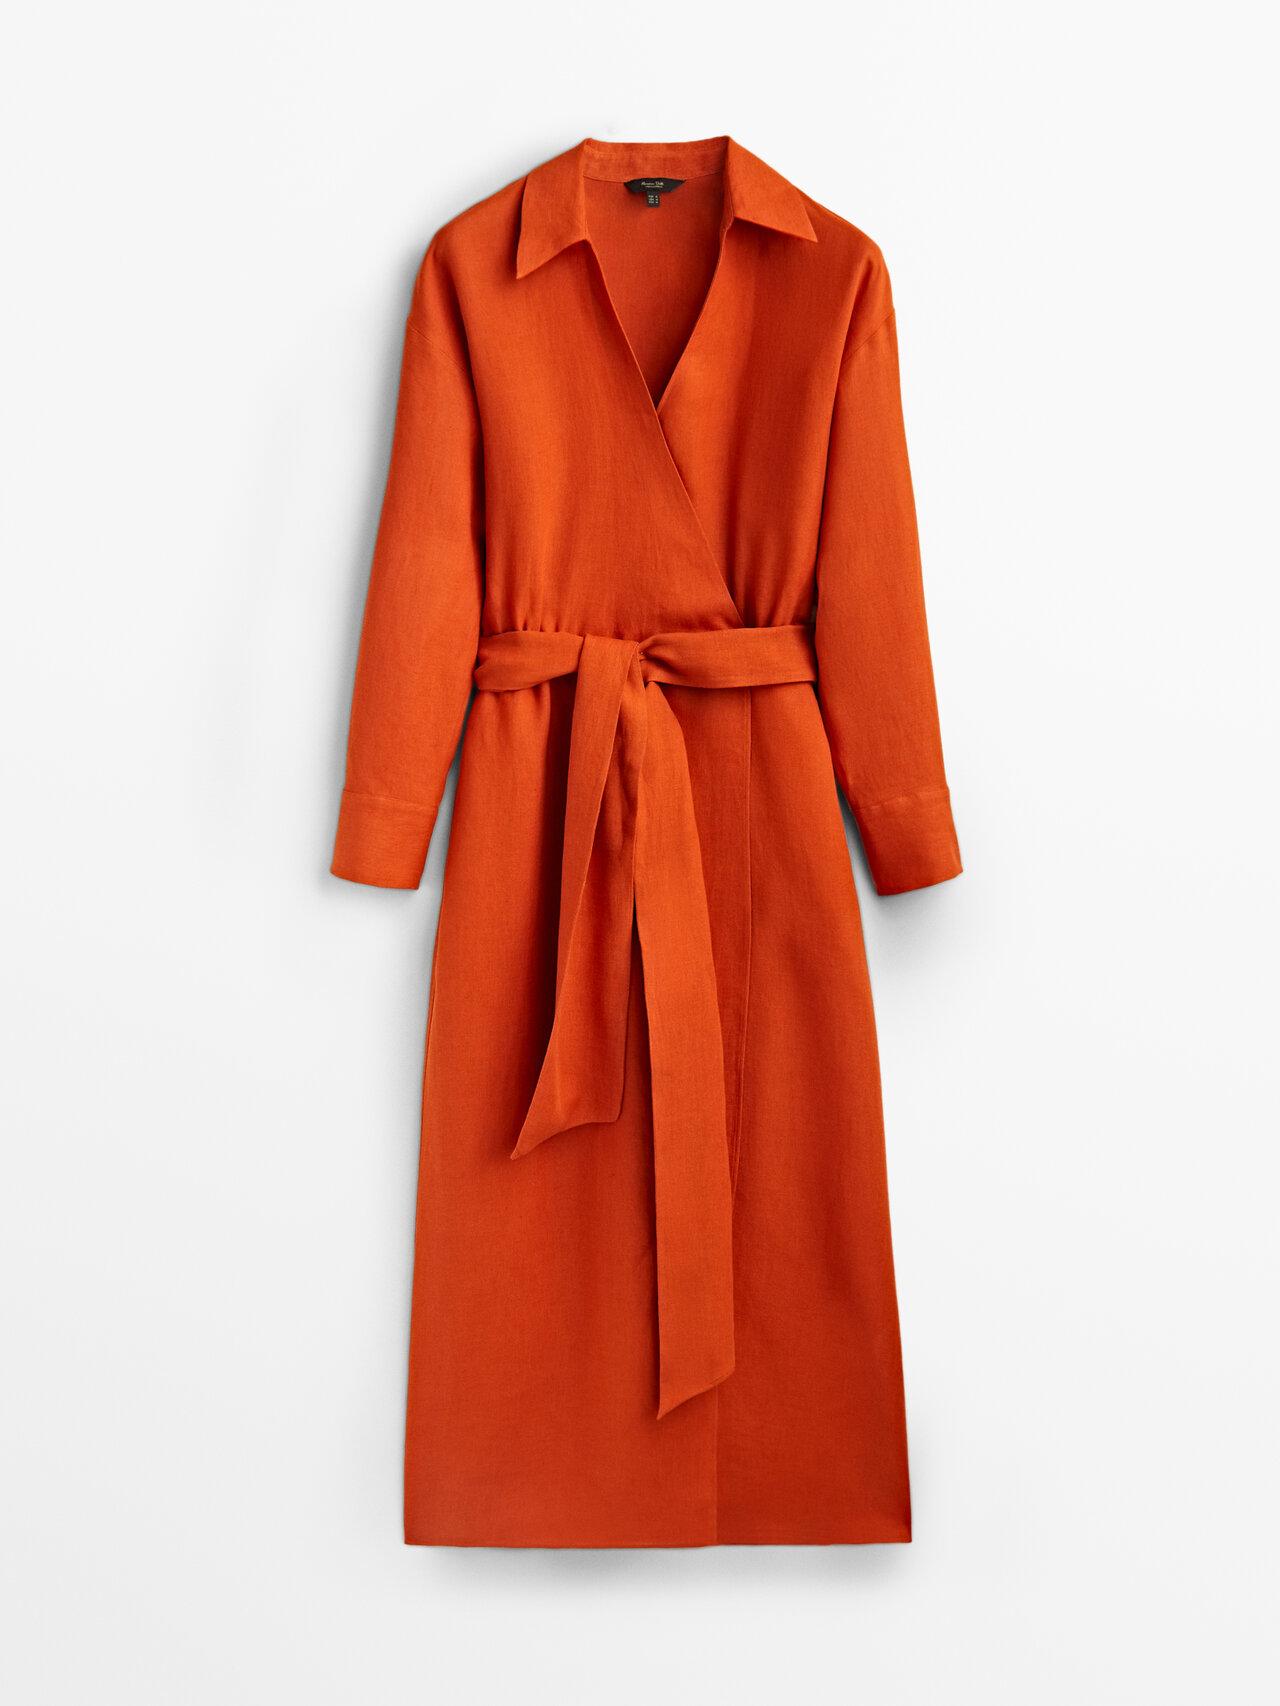 MASSIMO DUTTI Long Surplice Linen Dress in Orange | Lyst